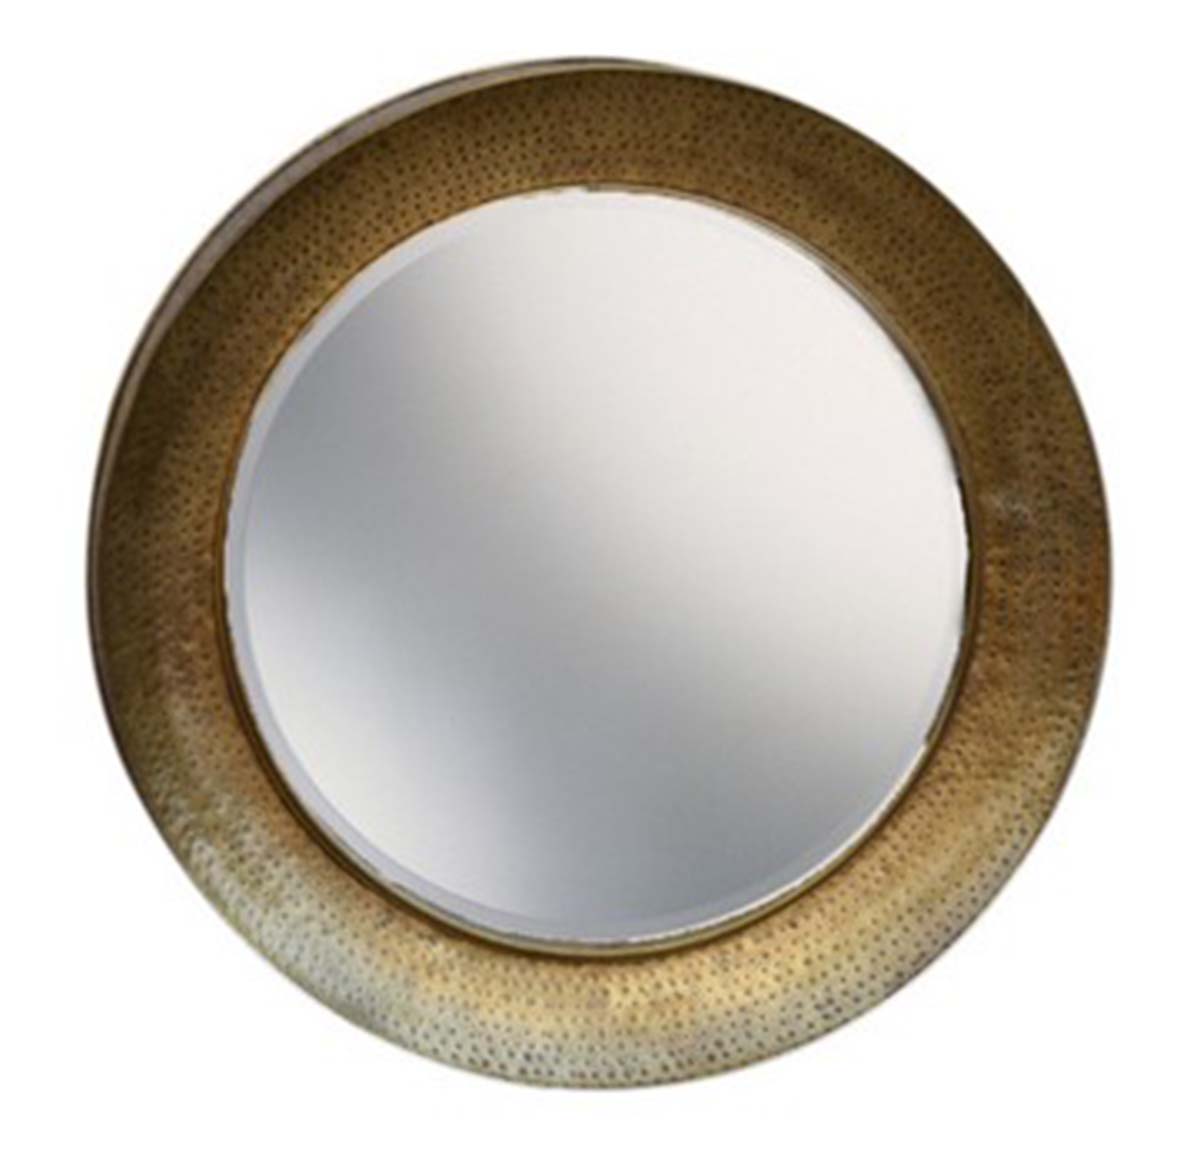 Greek Round Wall Hanging Metal Mirror - Gold | Home Decor